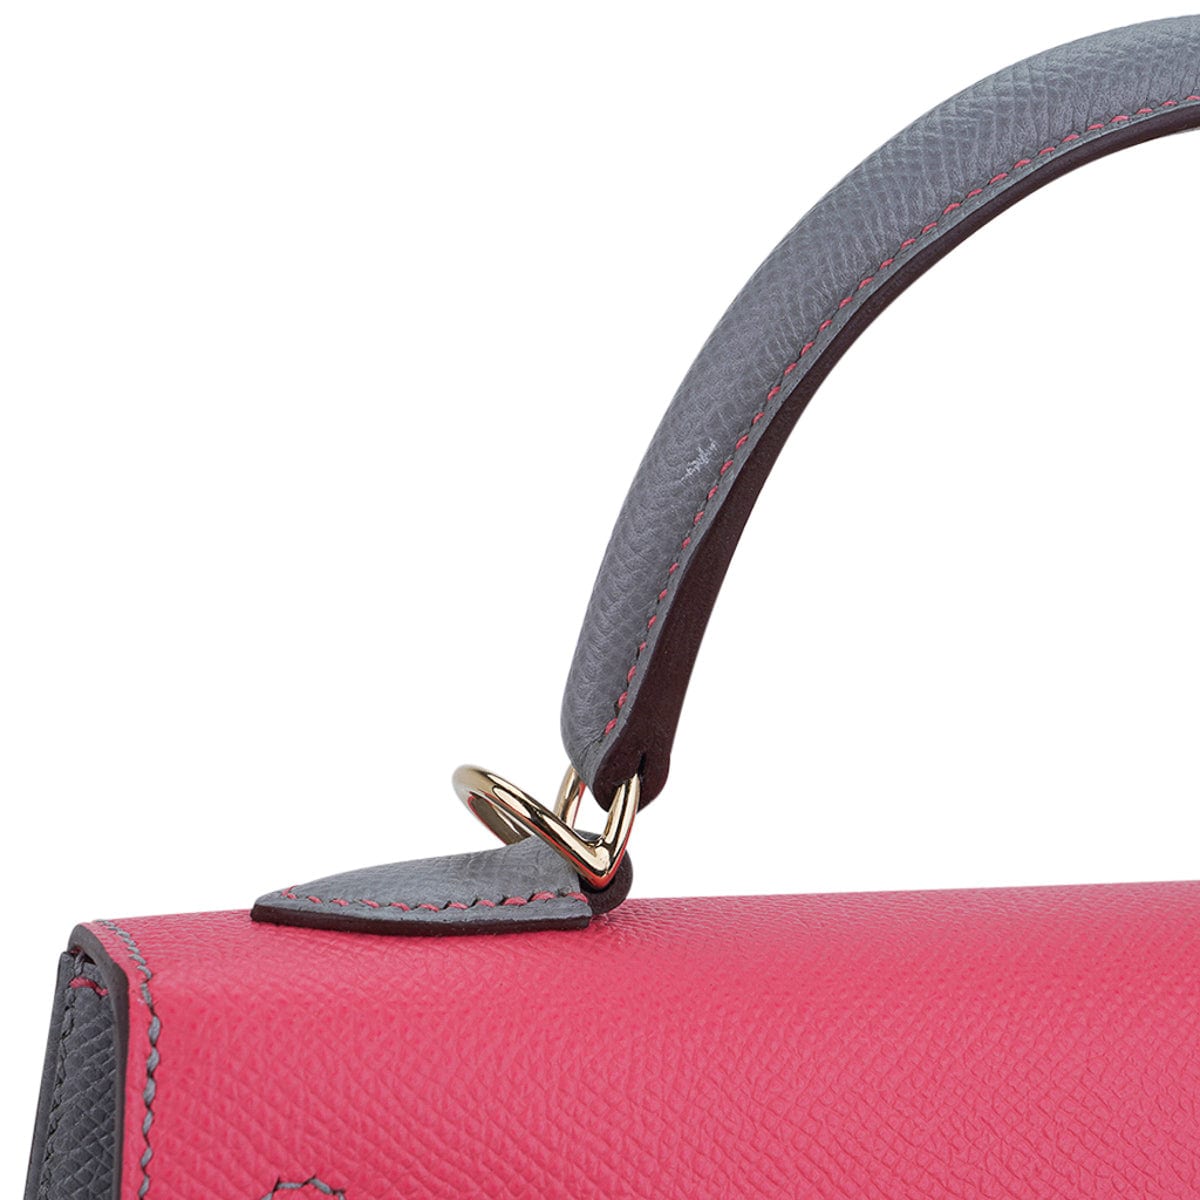 Hermes Kelly Sellier 25 HSS Bag Rose Azalee/Gris Mouette Leather